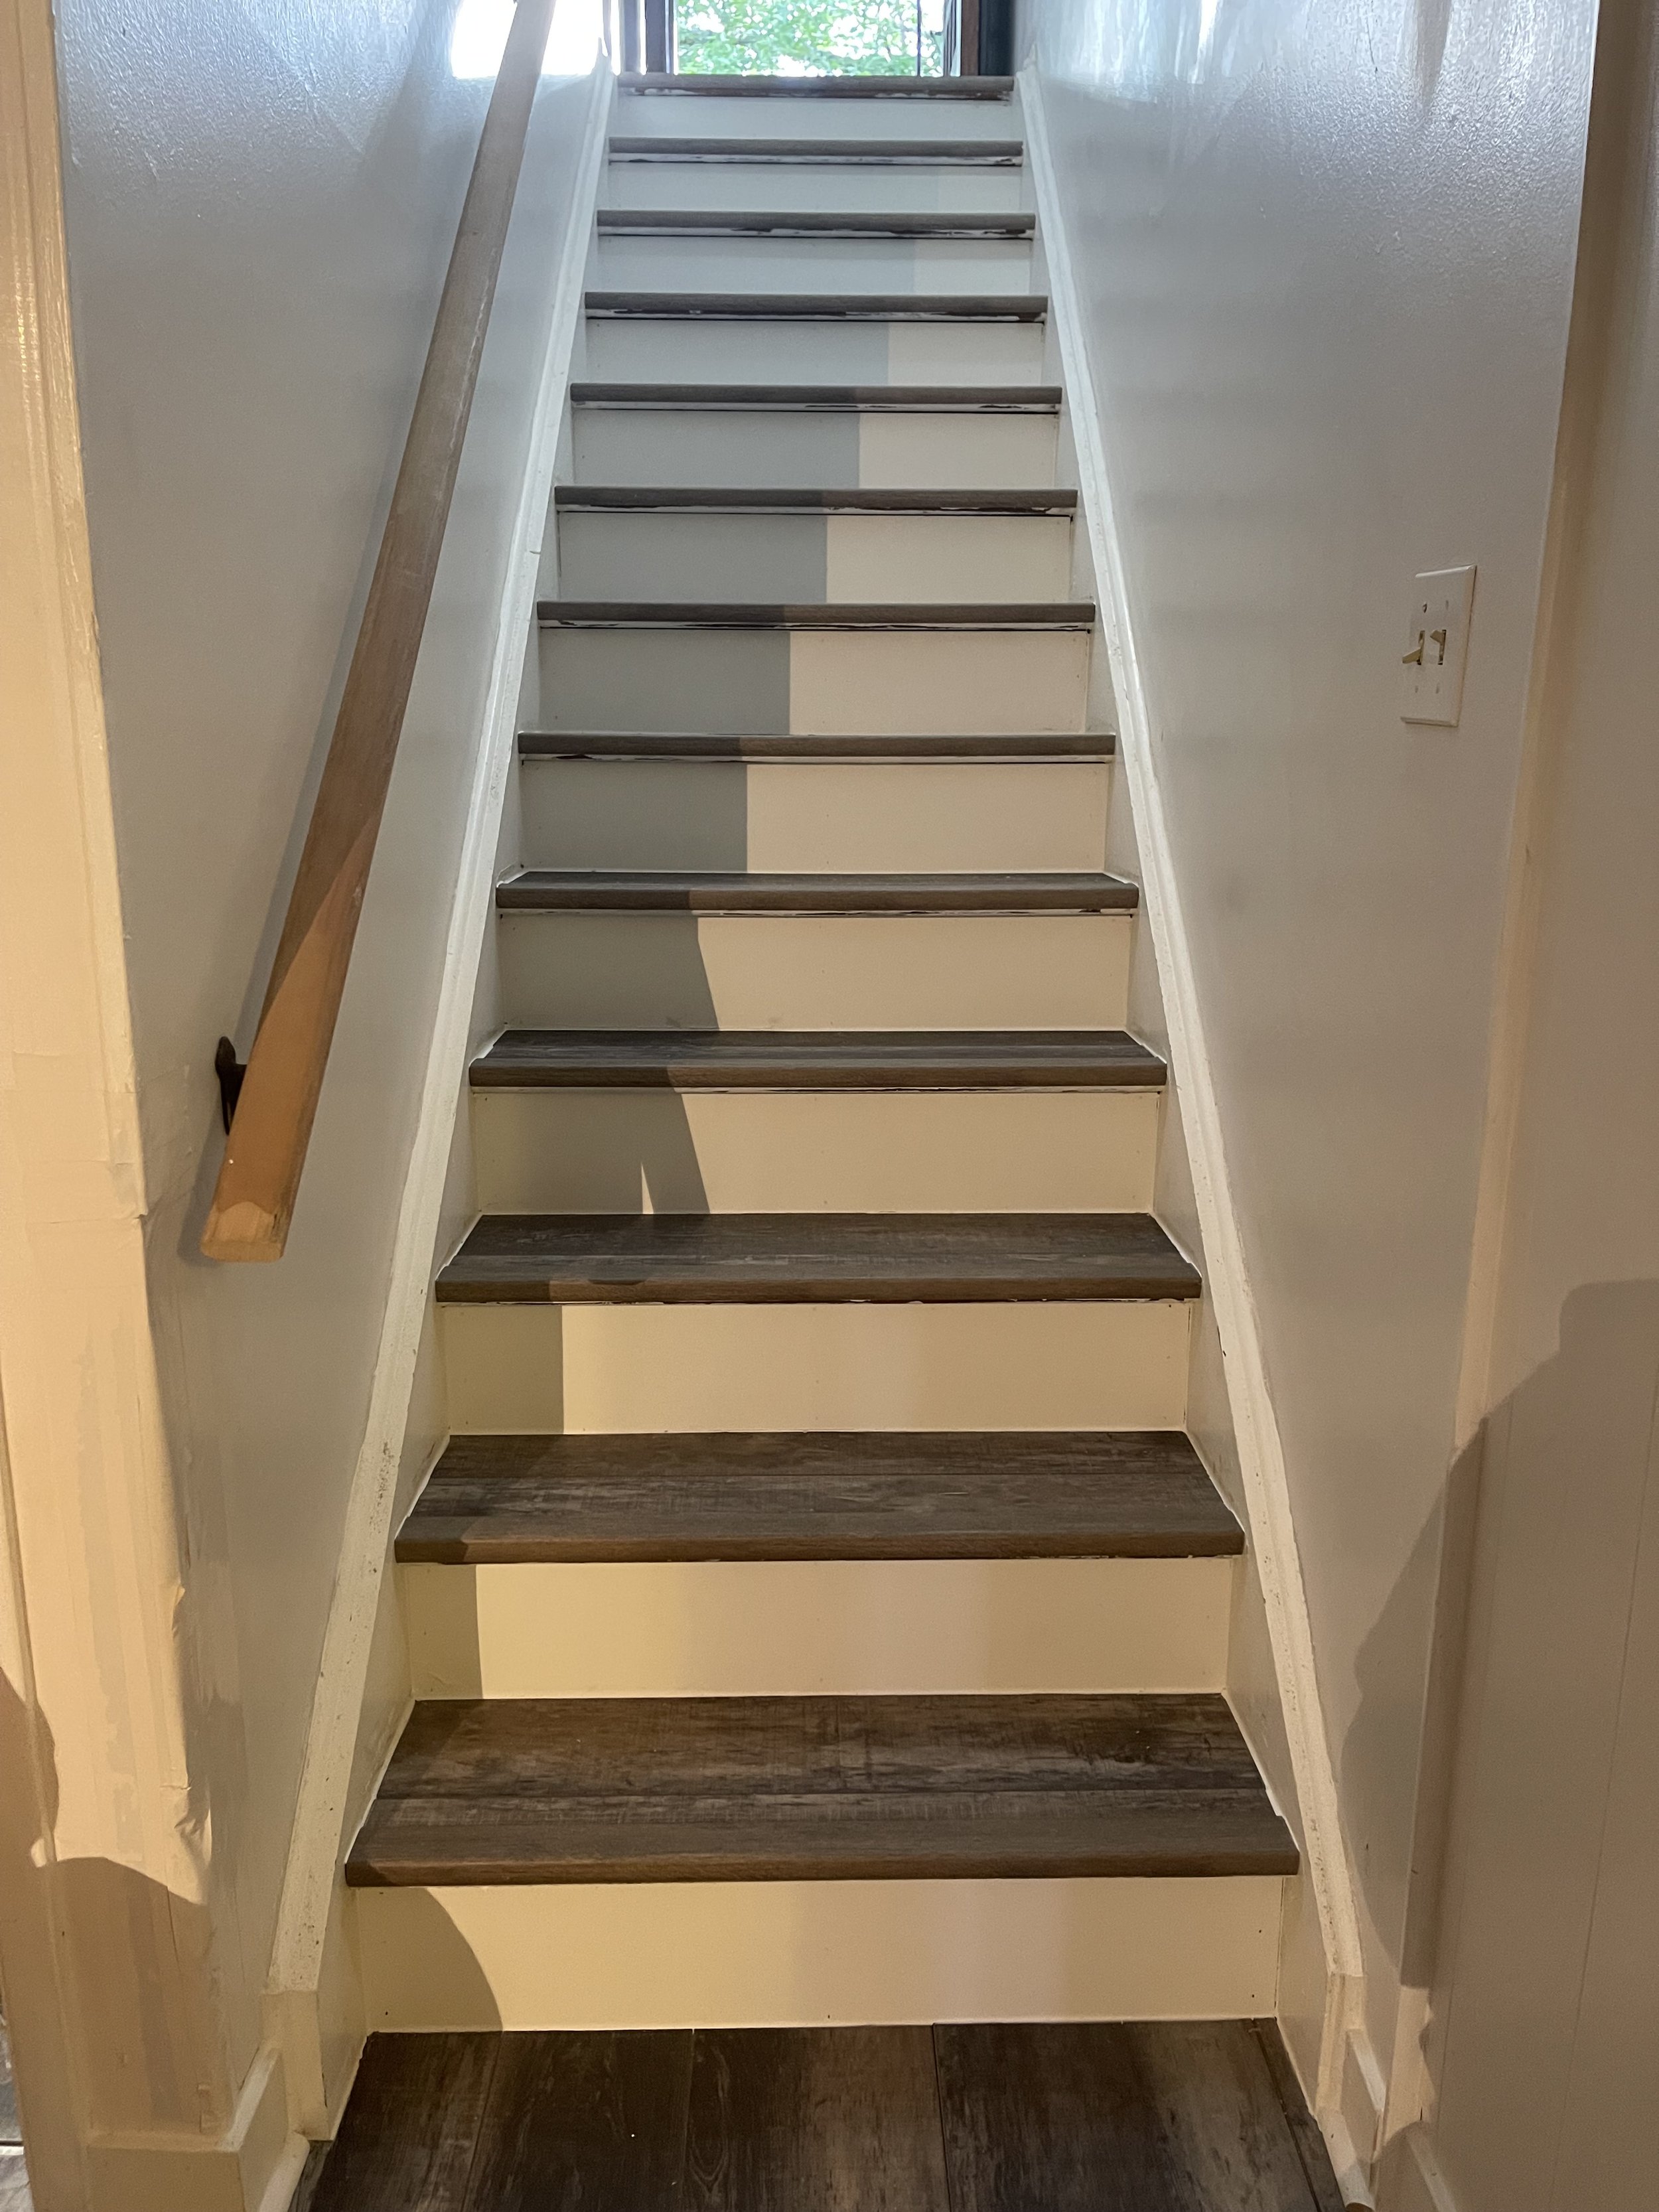 Lvp flooring and stair remodel